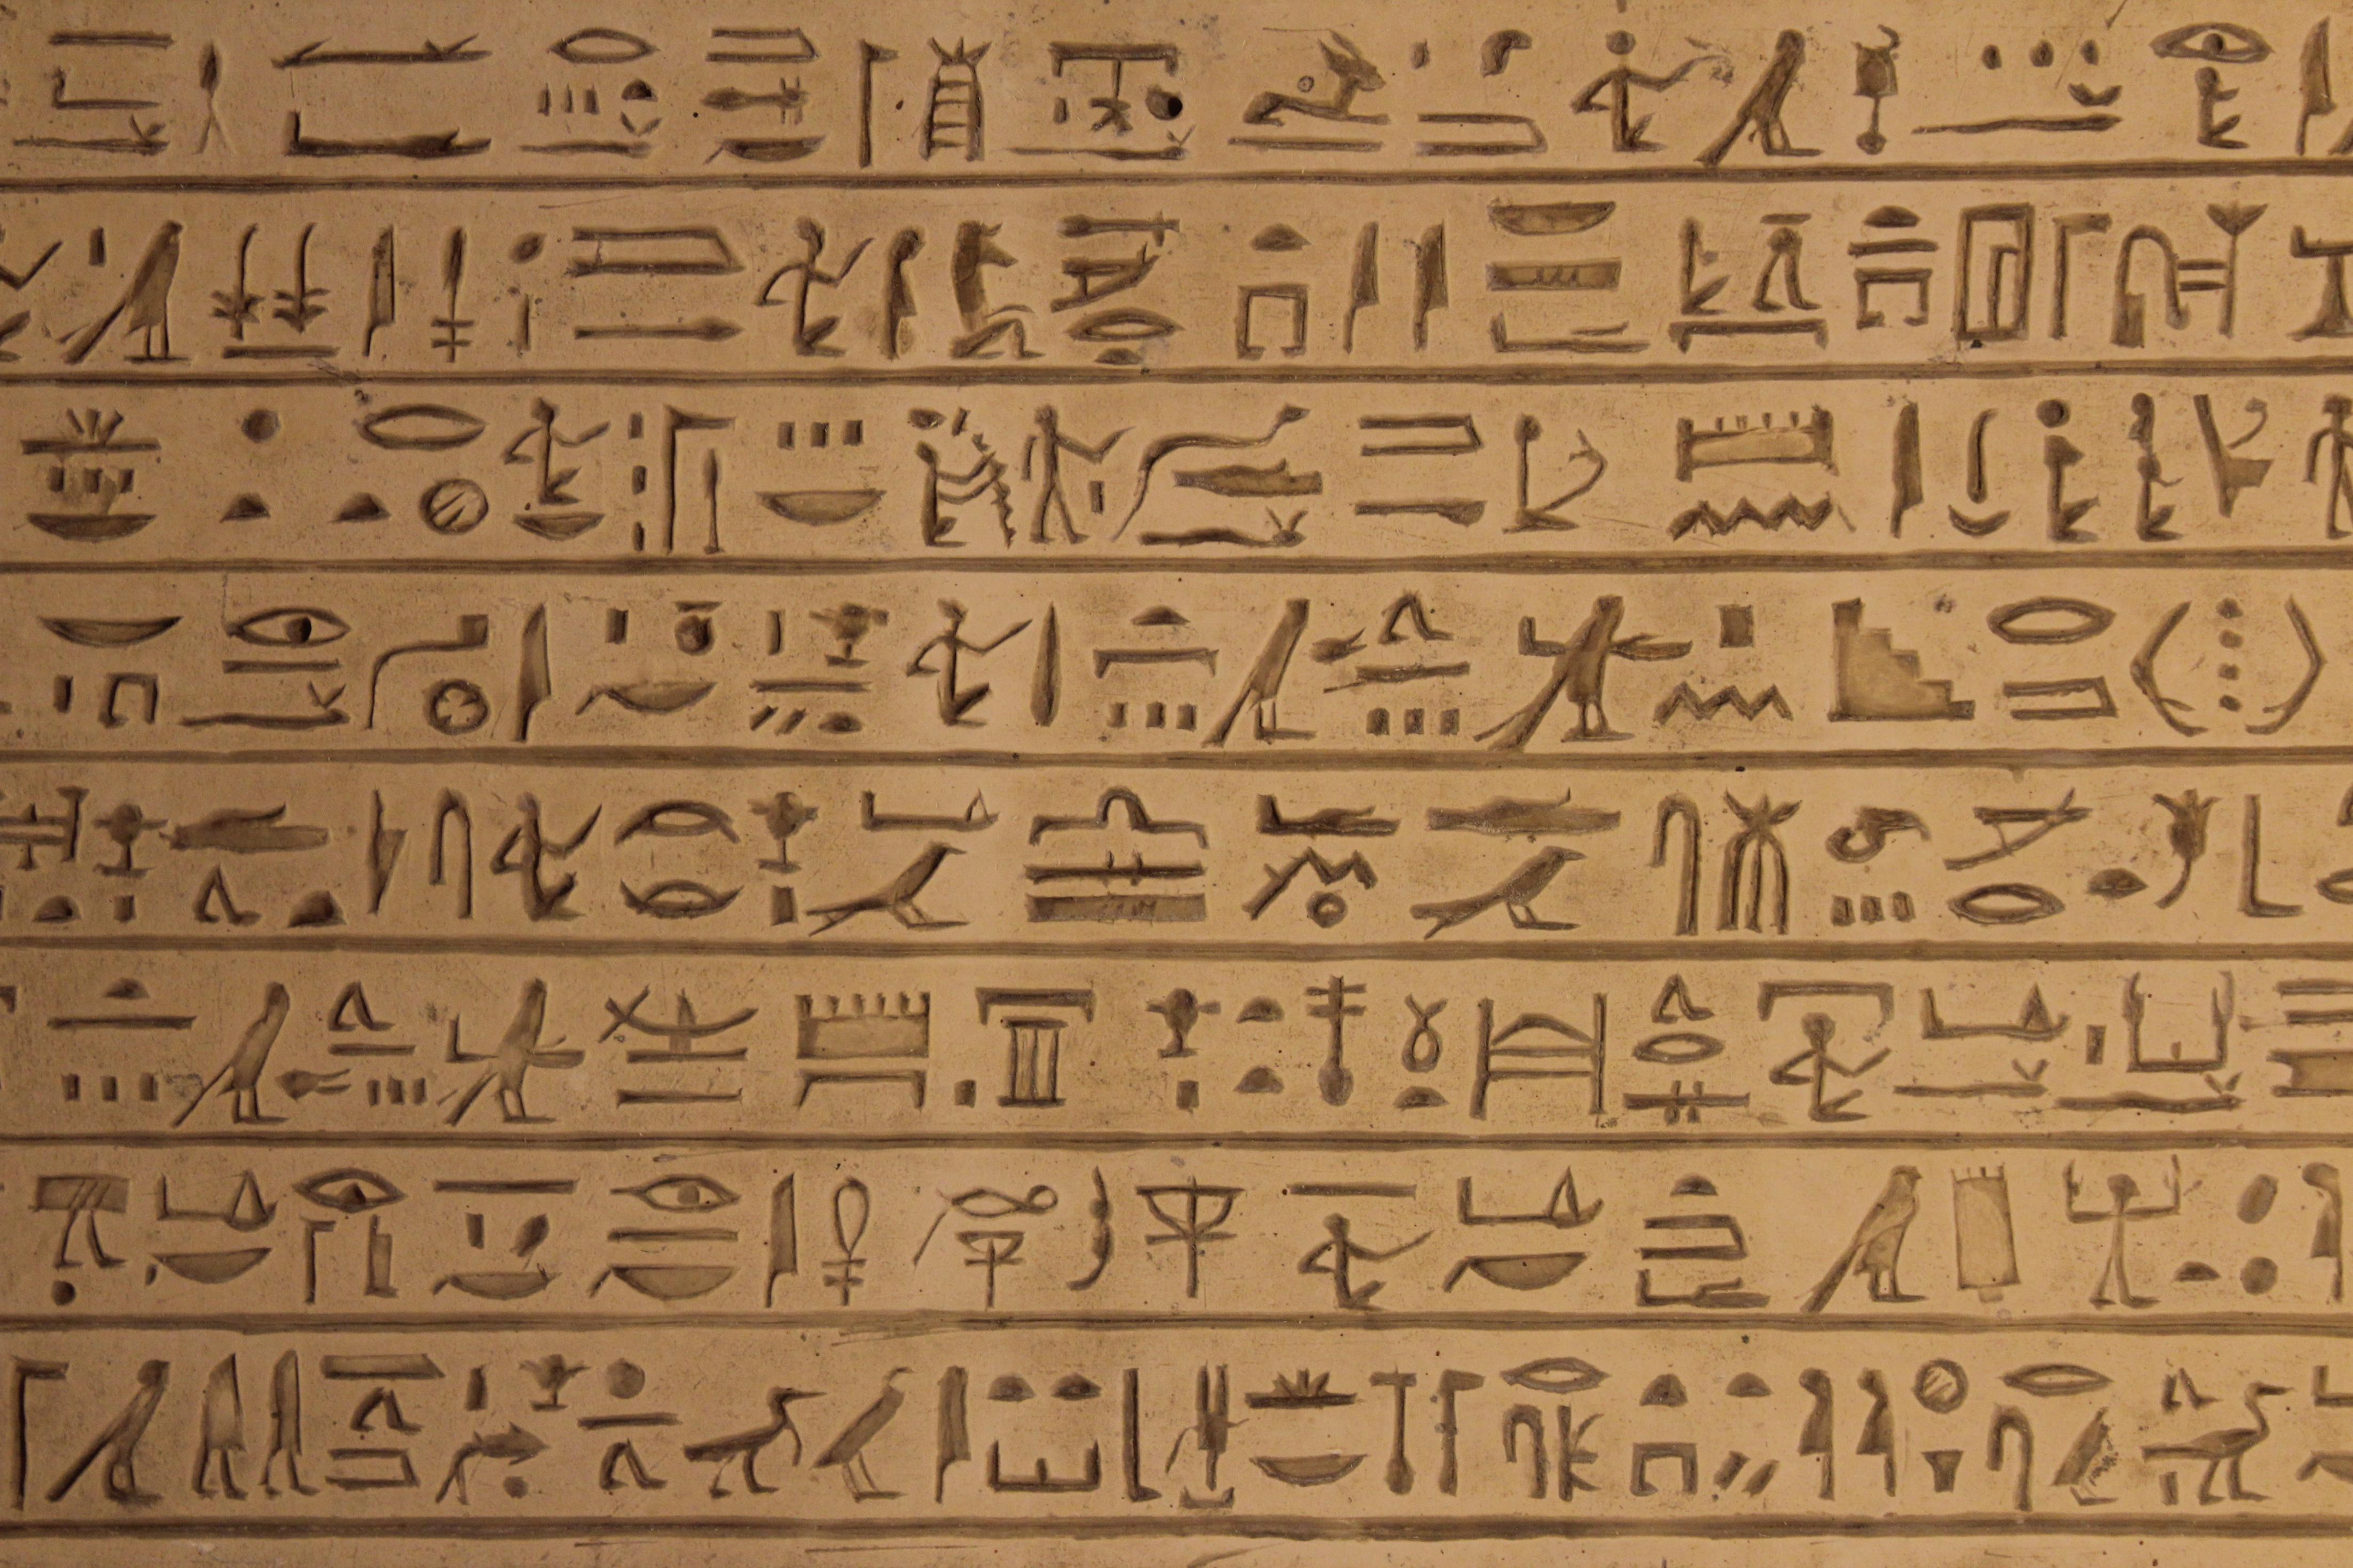 Download Free Egyptian Hieroglyphics Wallpapers Pixelstalknet